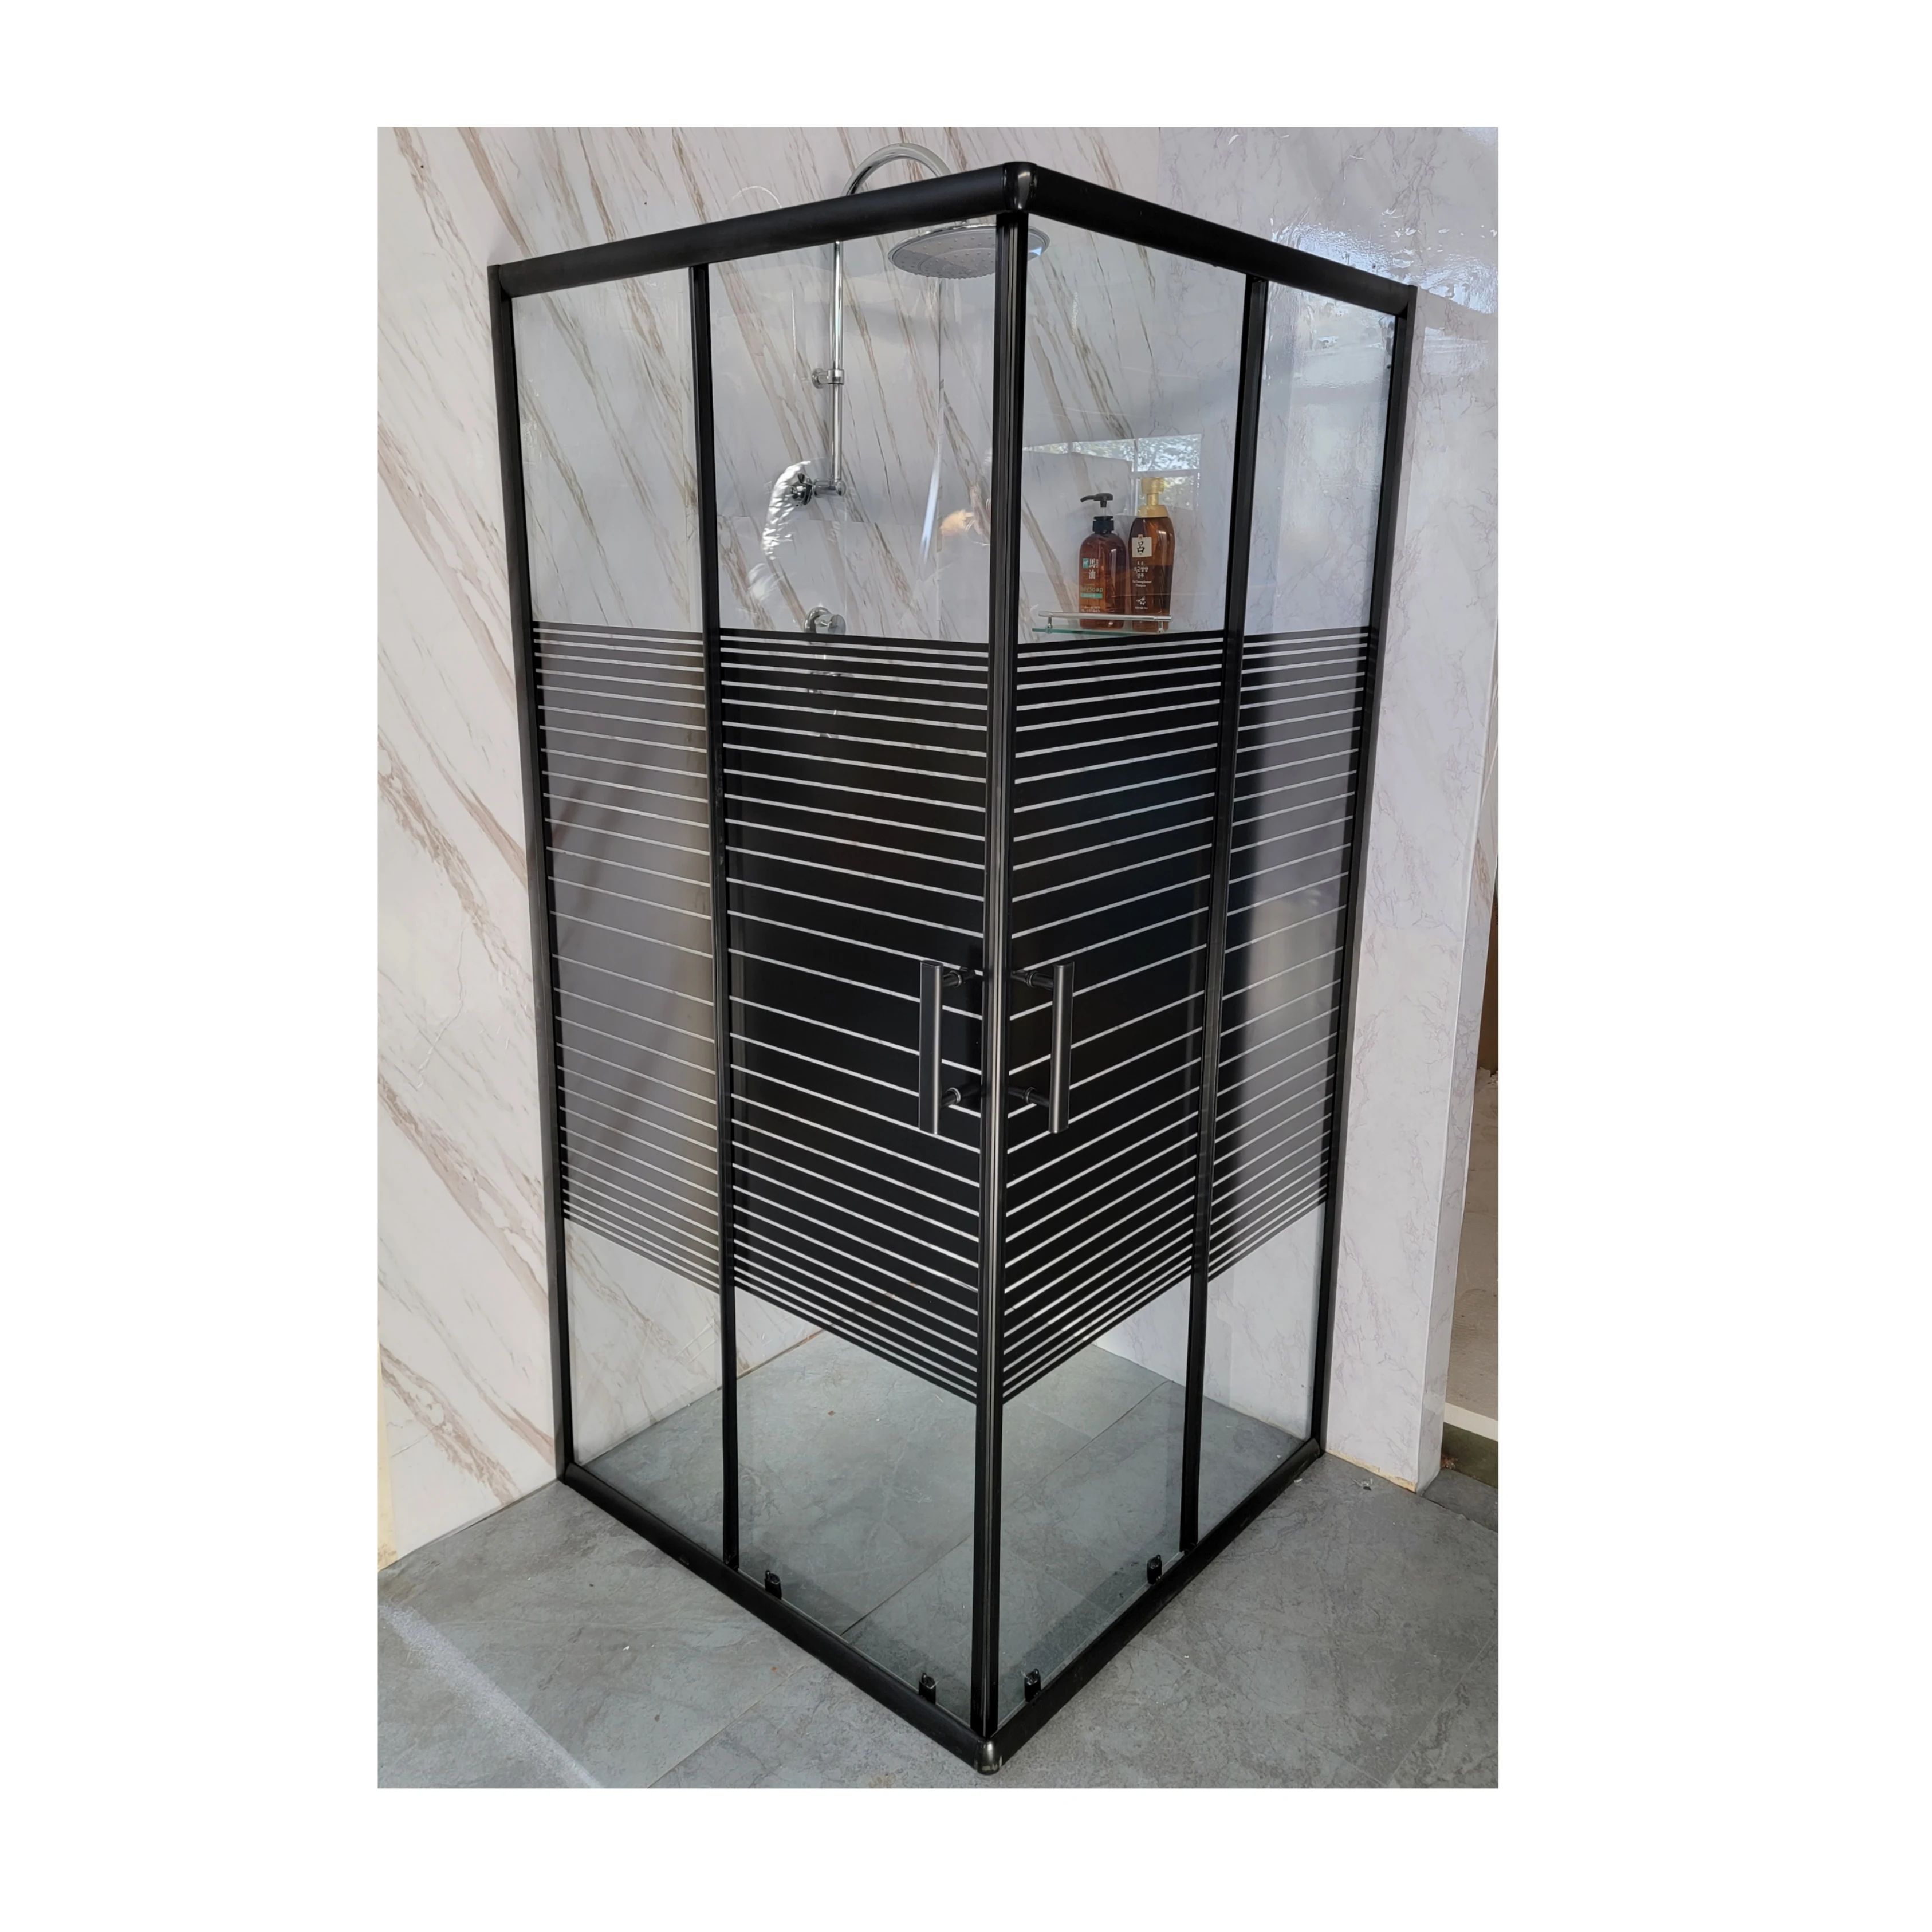 BLACK ALUMINUM Square glass shower enclosure set  for bathroom